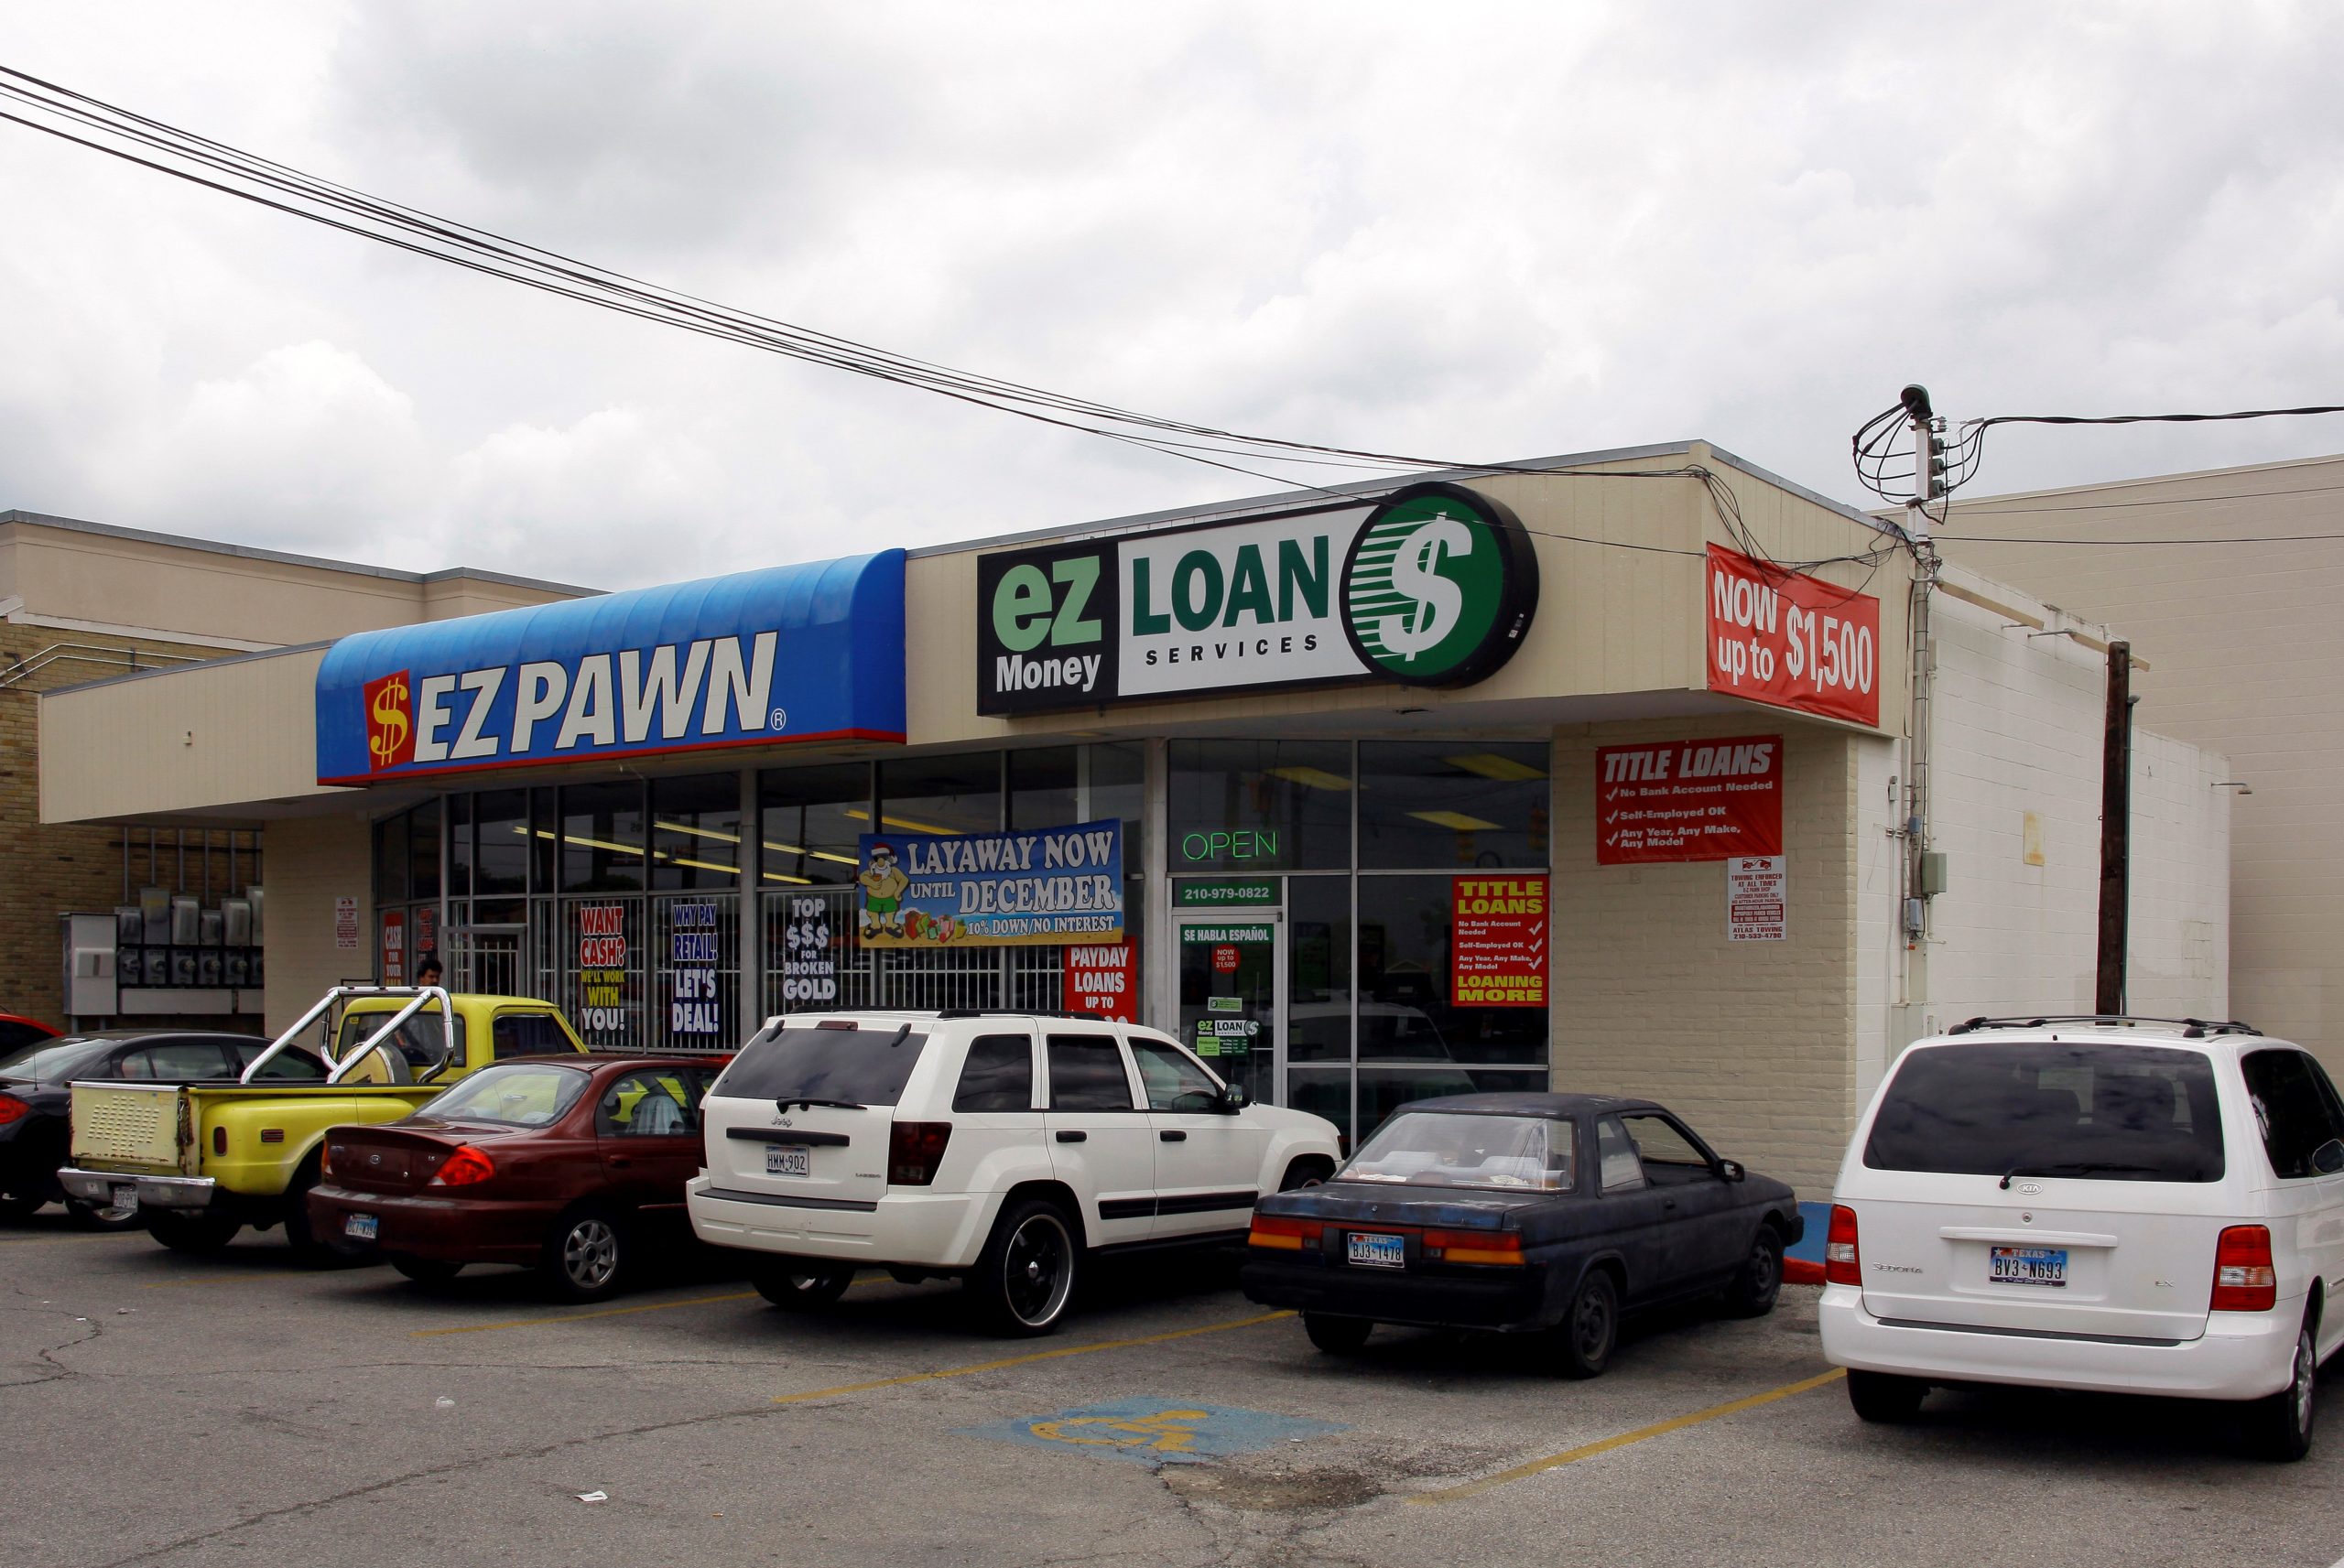 Exterior Photograph of EZ Pawn in San Antonio, Texas